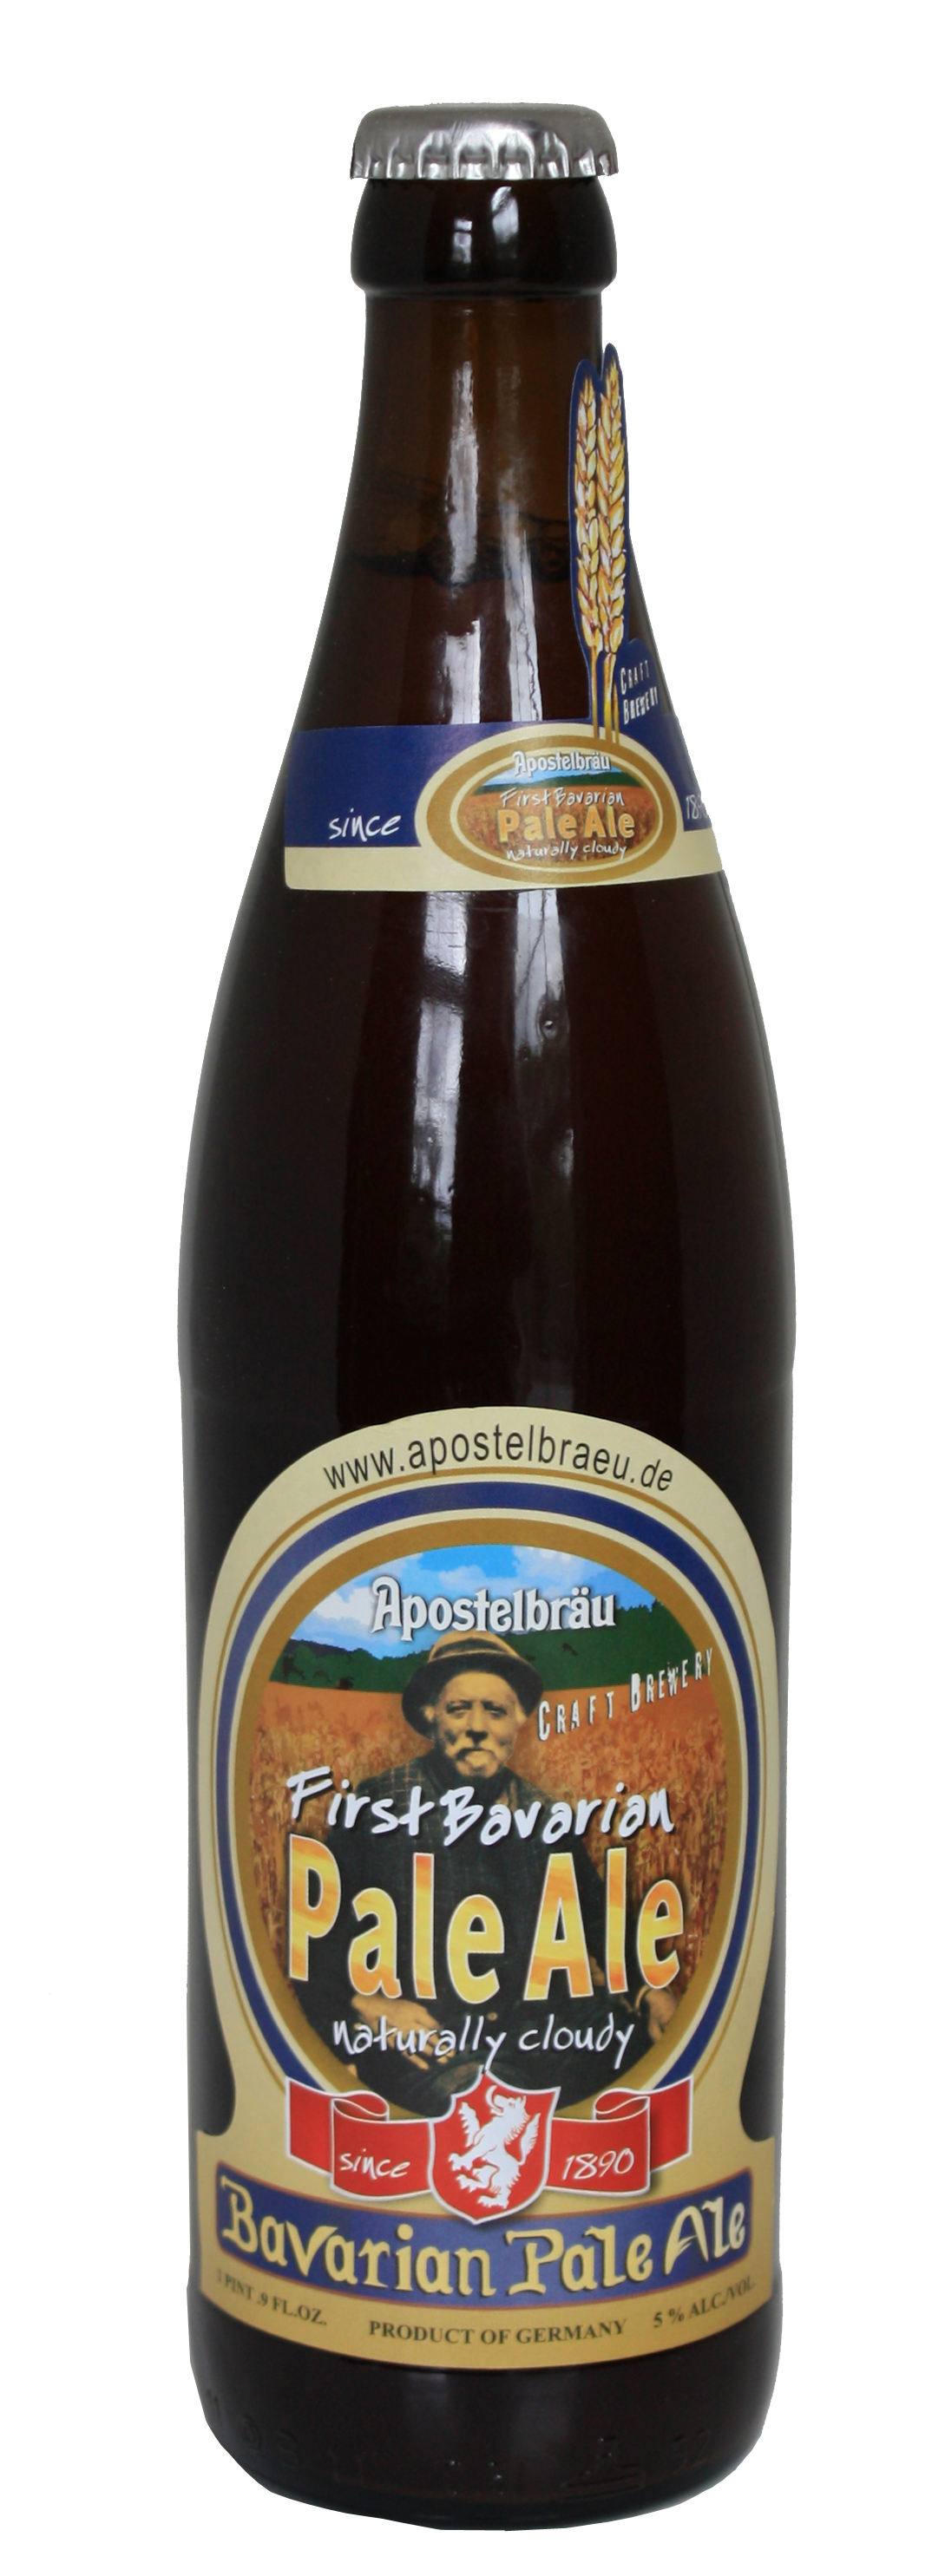 First Bavarian Pale Ale bottle label